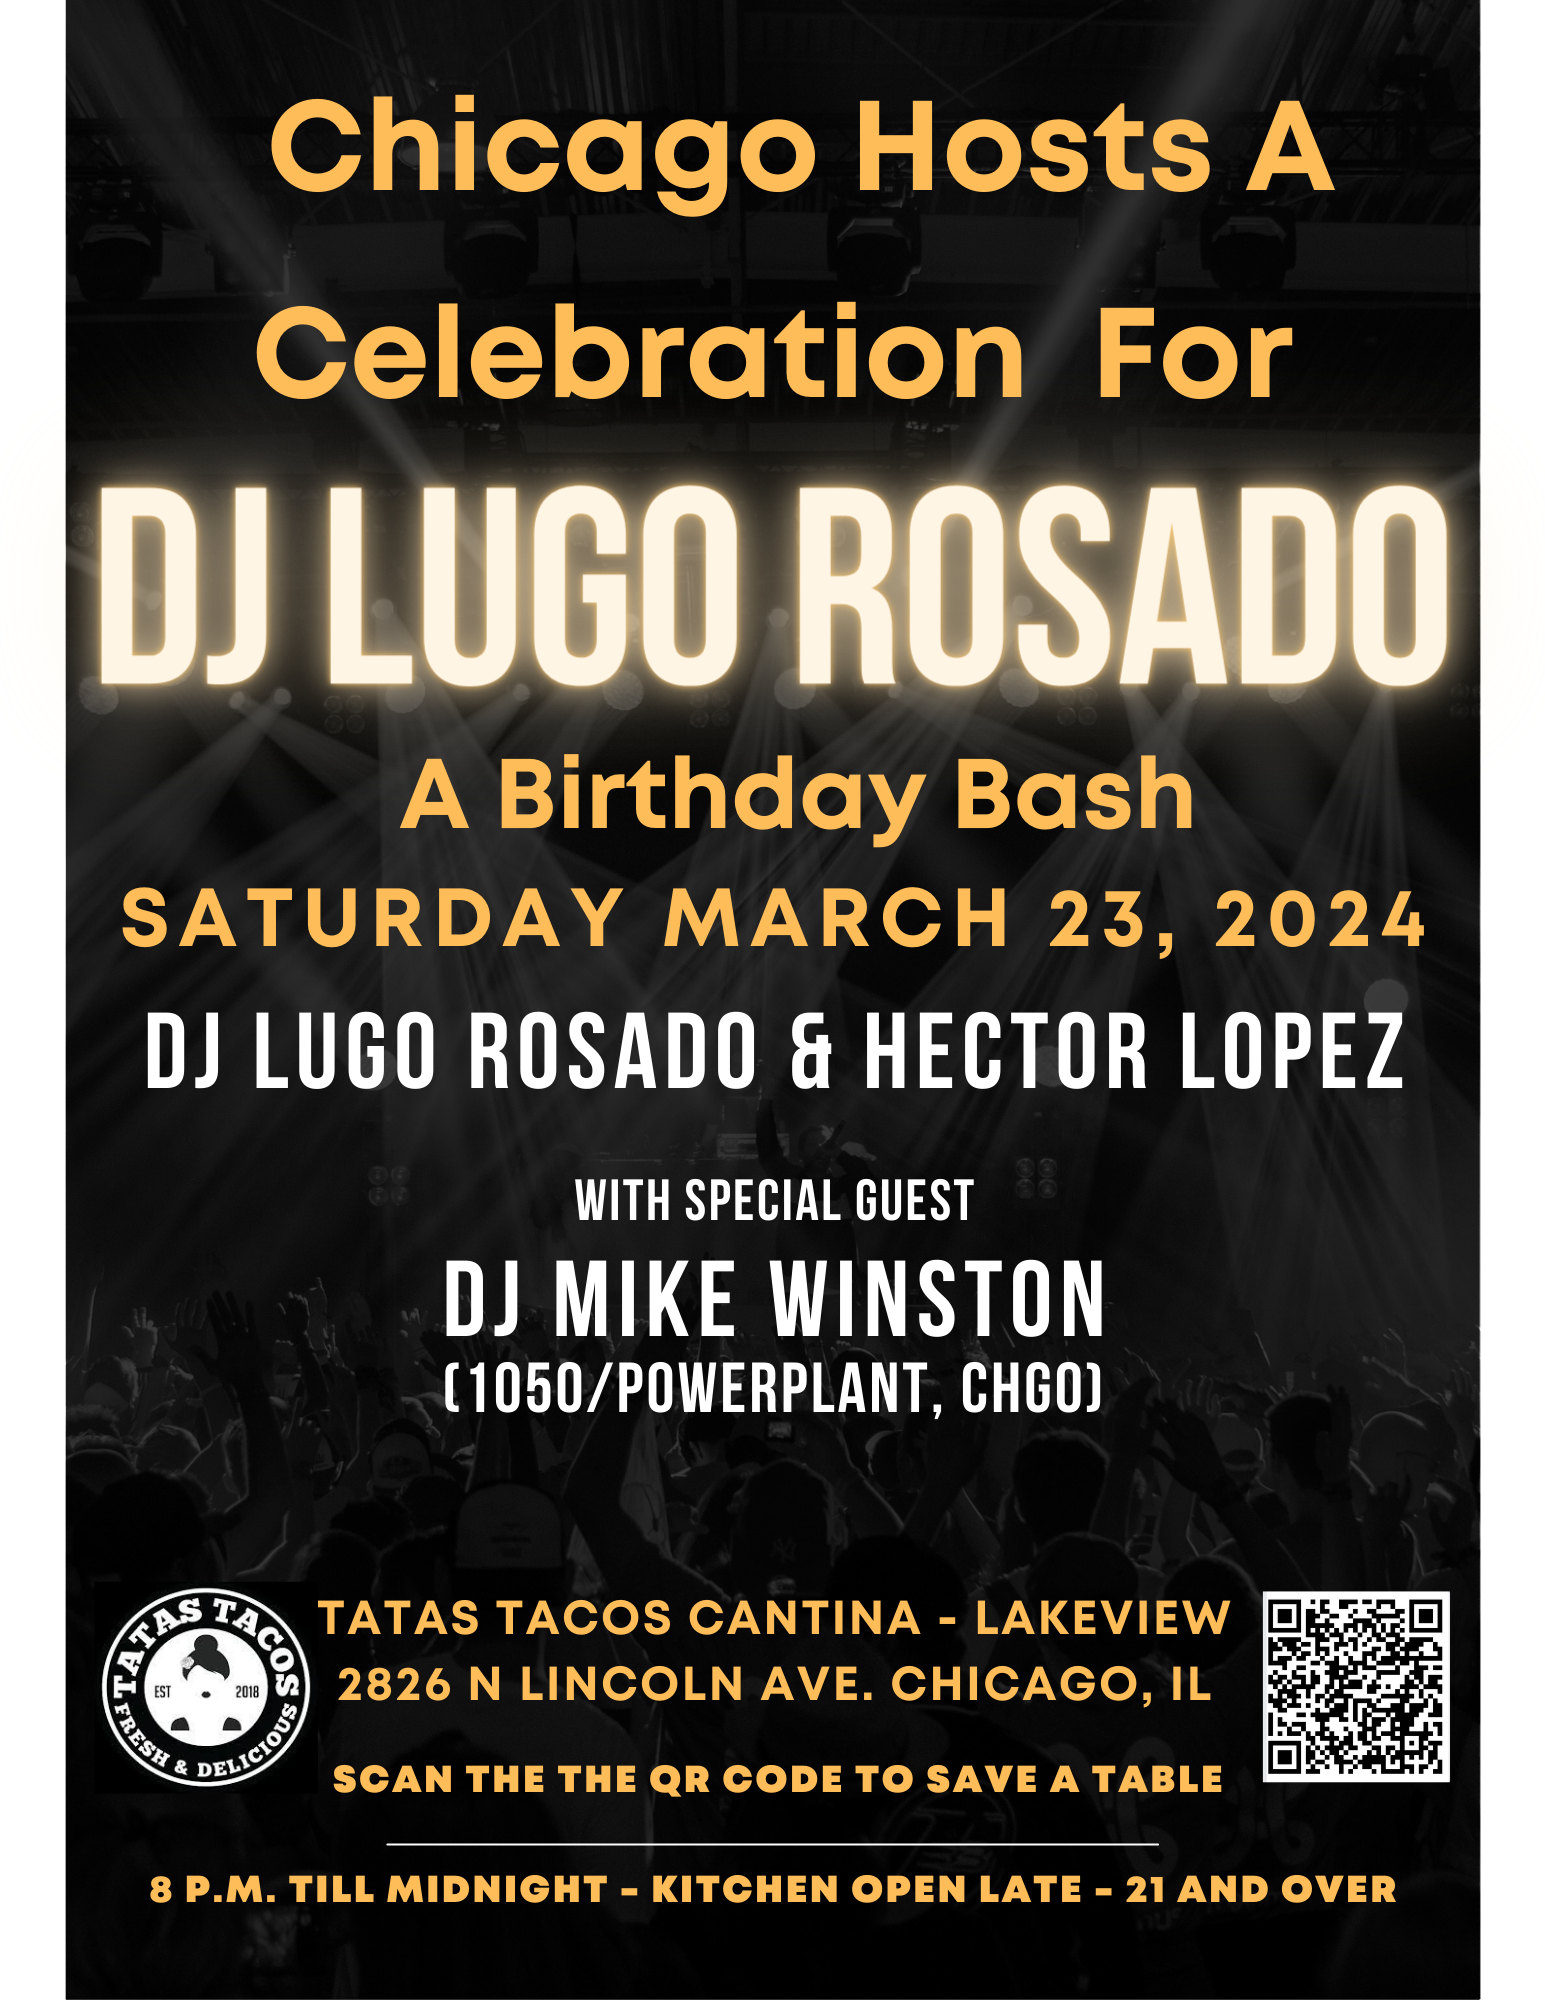 Chicago Hosts A Celebration For DJ Lugo Rosado's Birthday Bash - フライヤー表